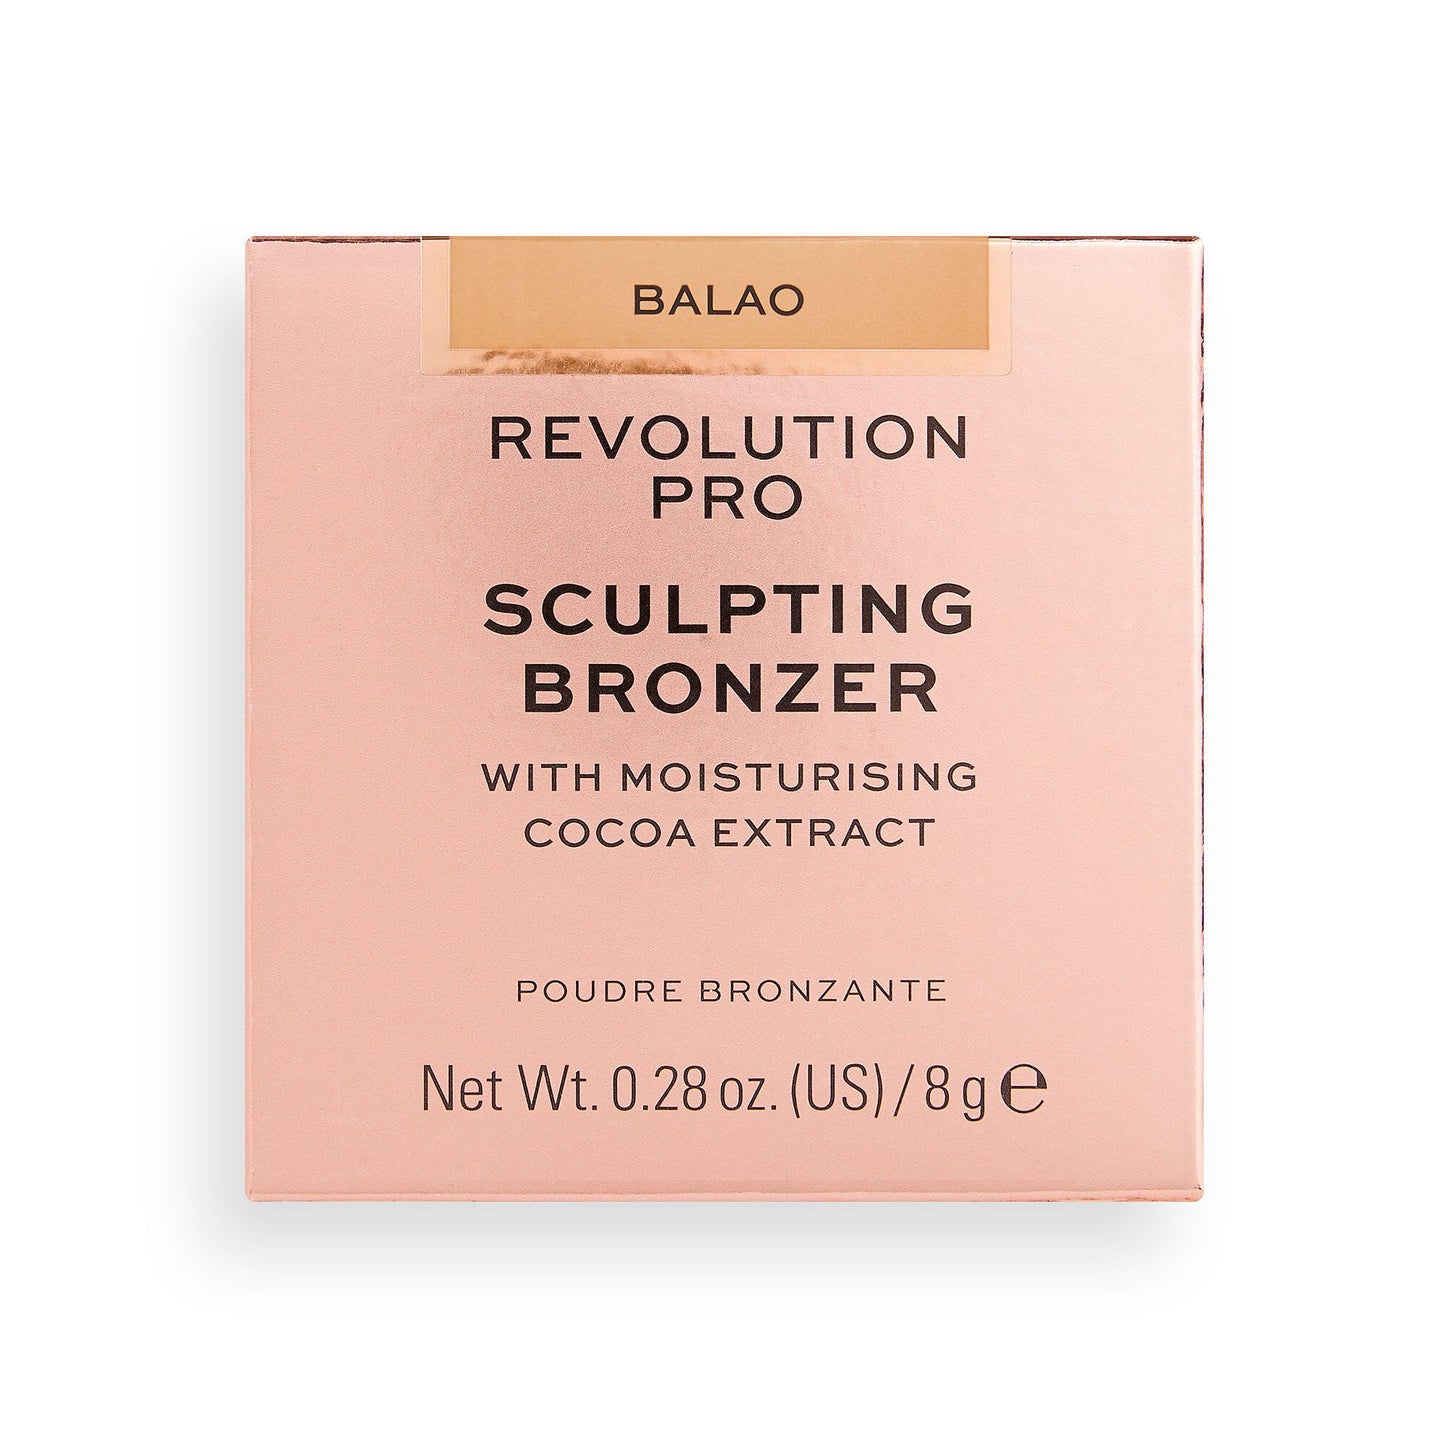 Revolution Pro Sculpting Bronzer Balao